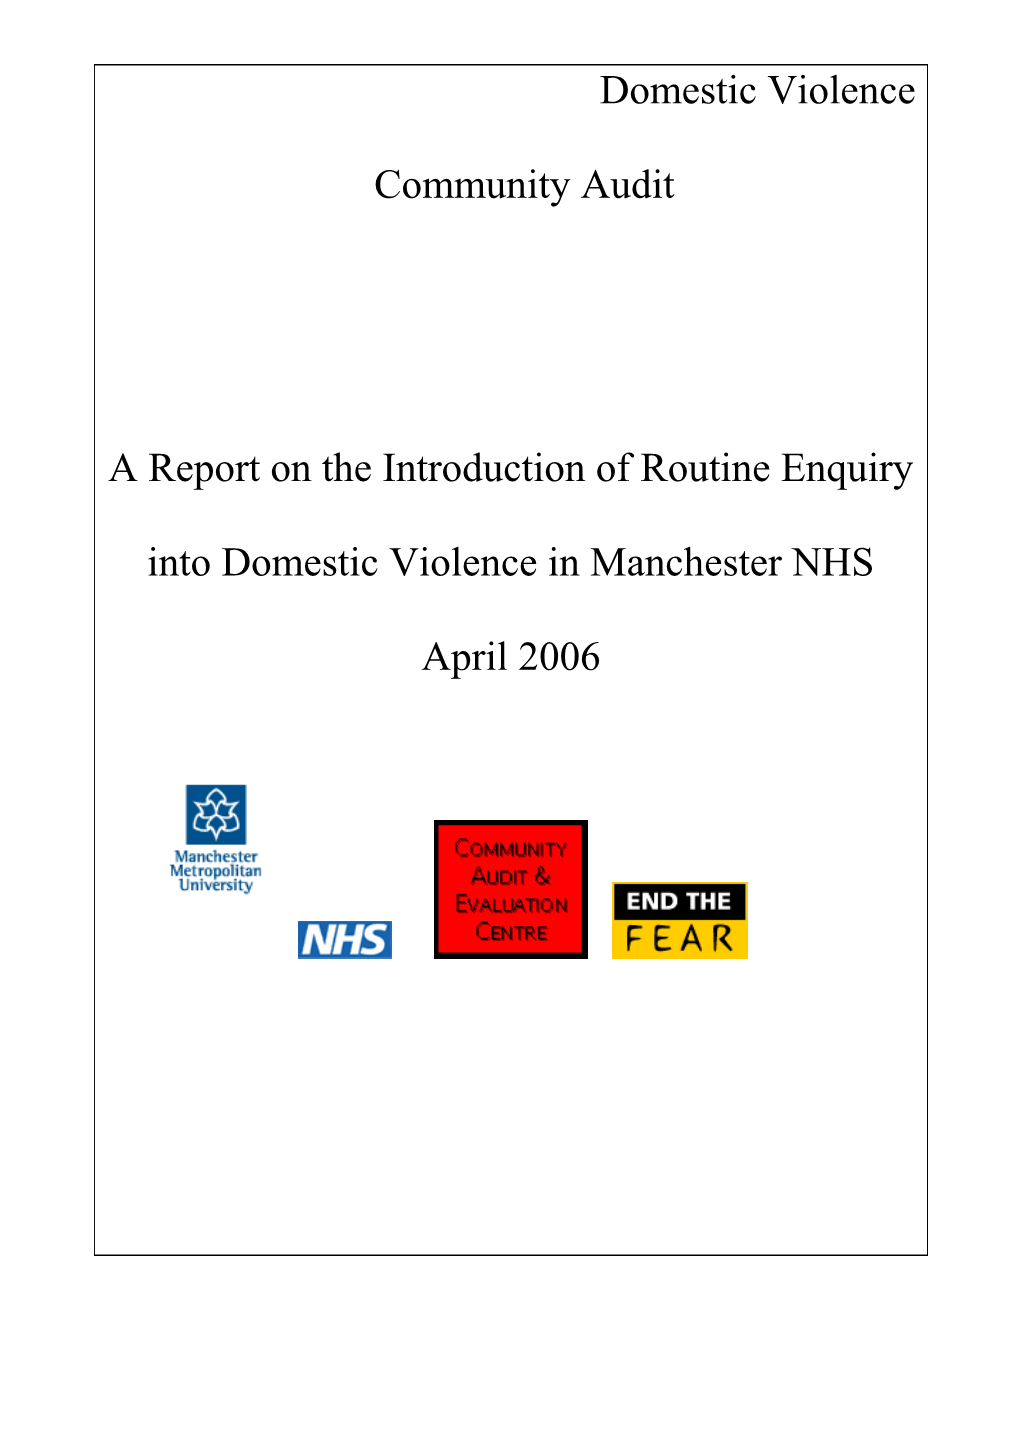 Domestic Violence Community Audit